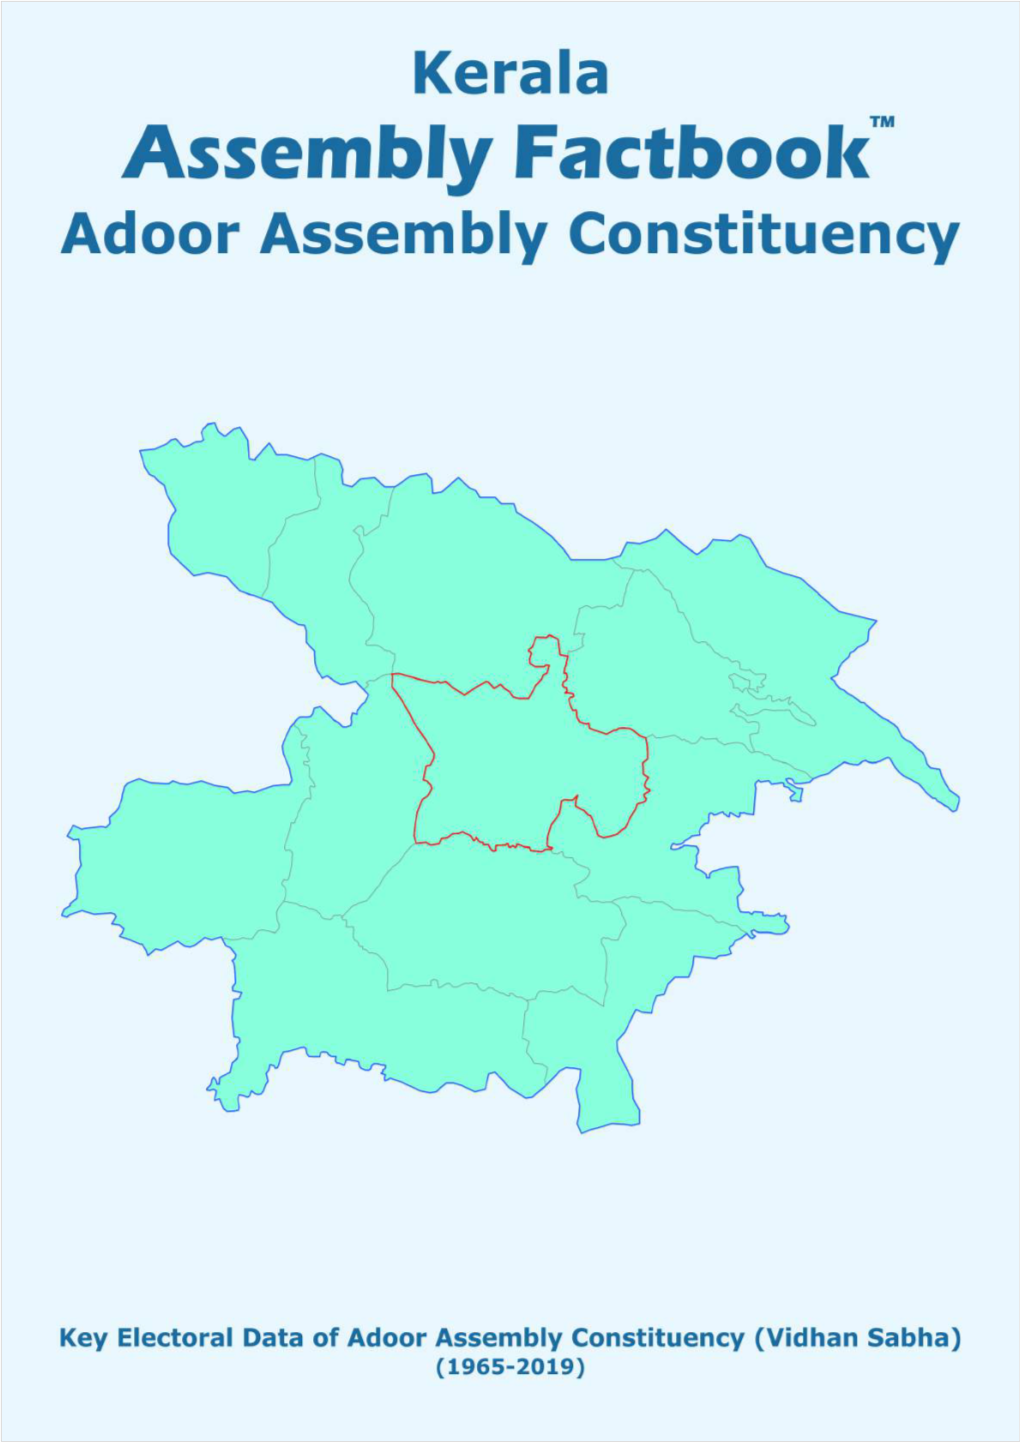 Adoor Assembly Kerala Factbook